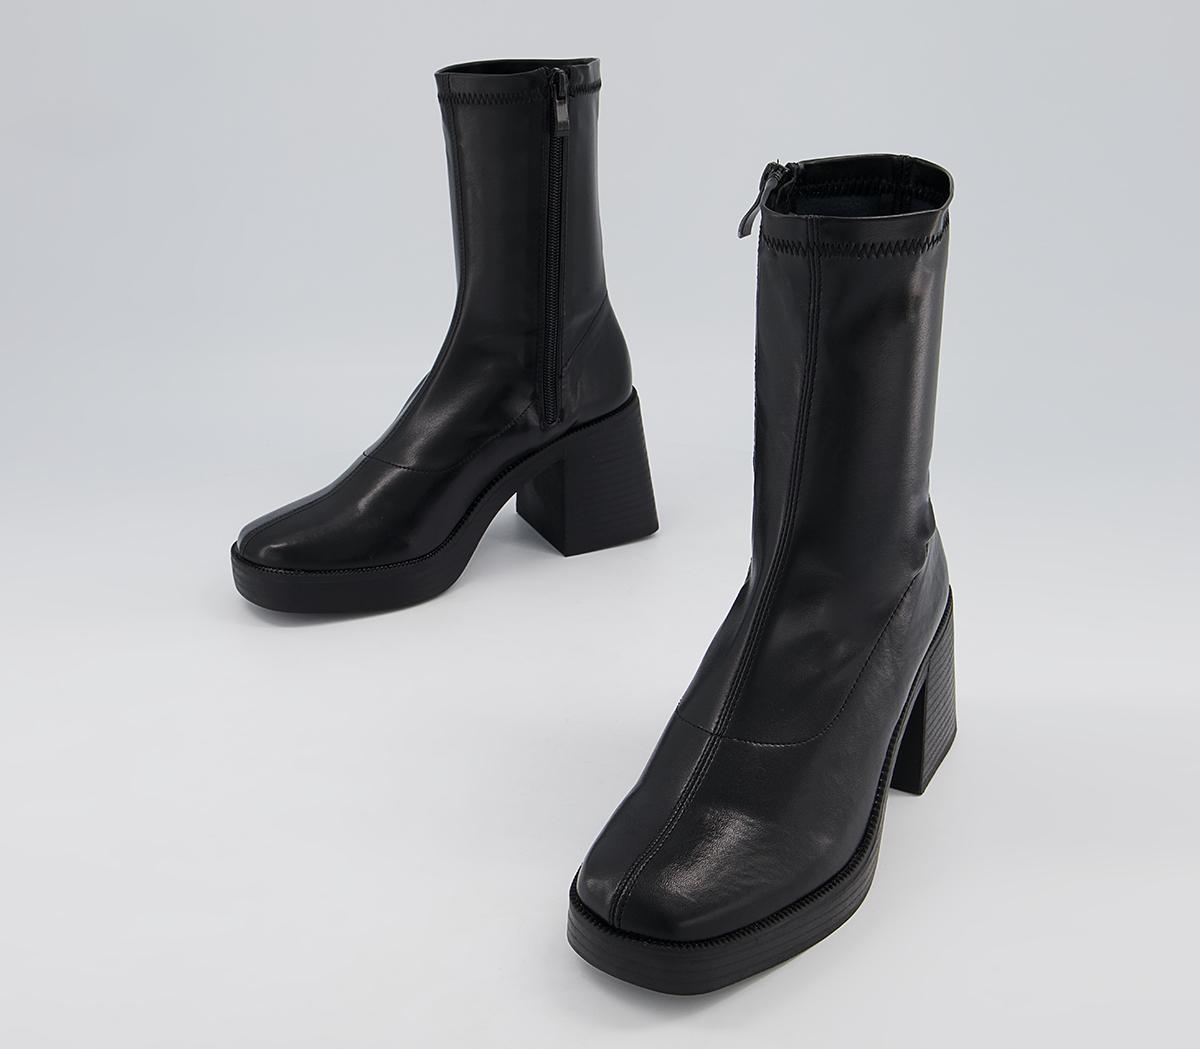 Raid Rubinaa Heeled Boots Black - Women's Ankle Boots